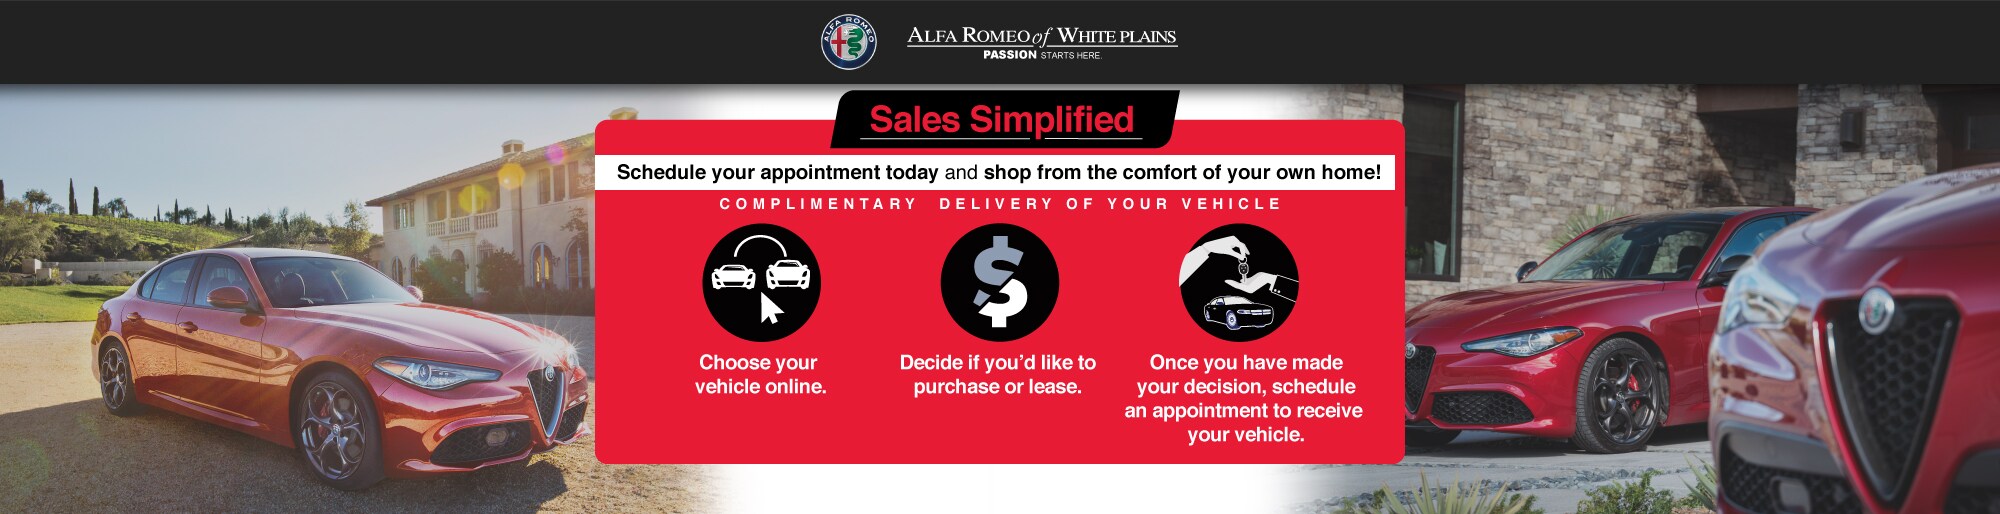 Alfa Romeo White Plains Express Shopping Image